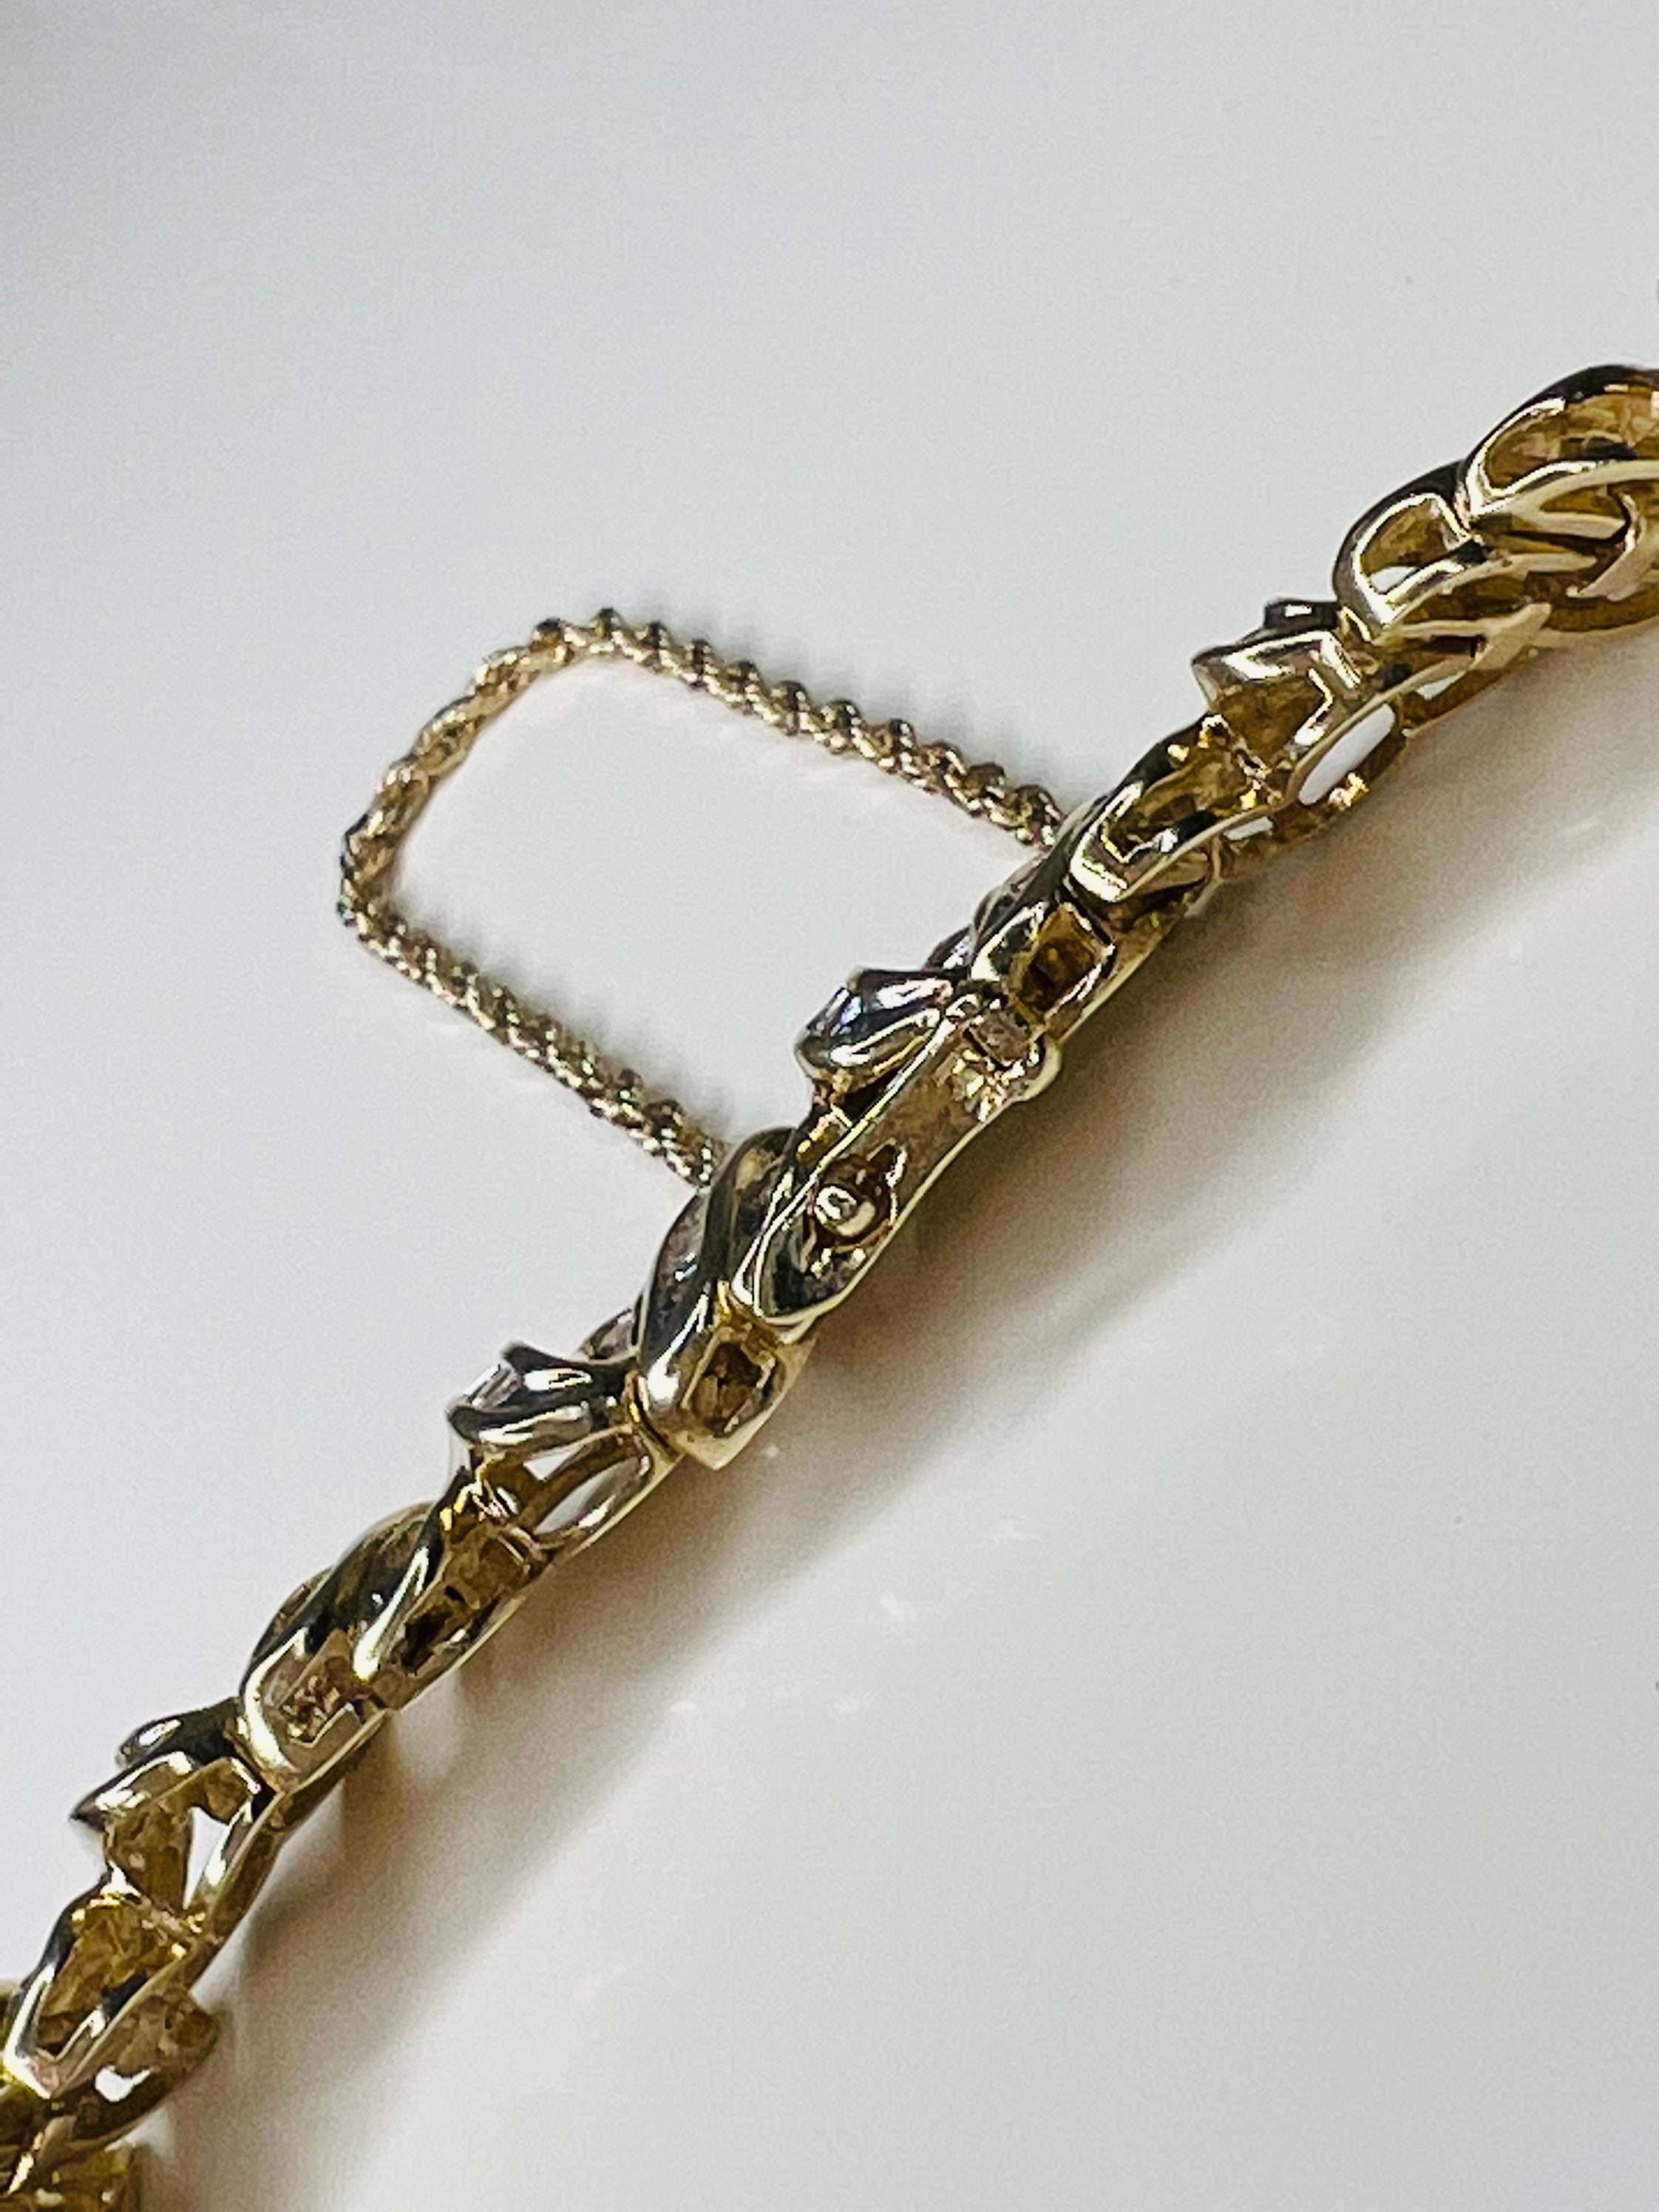 10-Pack & Jewelry Bundle  10 Bracelets + 2 Rings + 1 Necklace ($245 V –  Ascend Wood